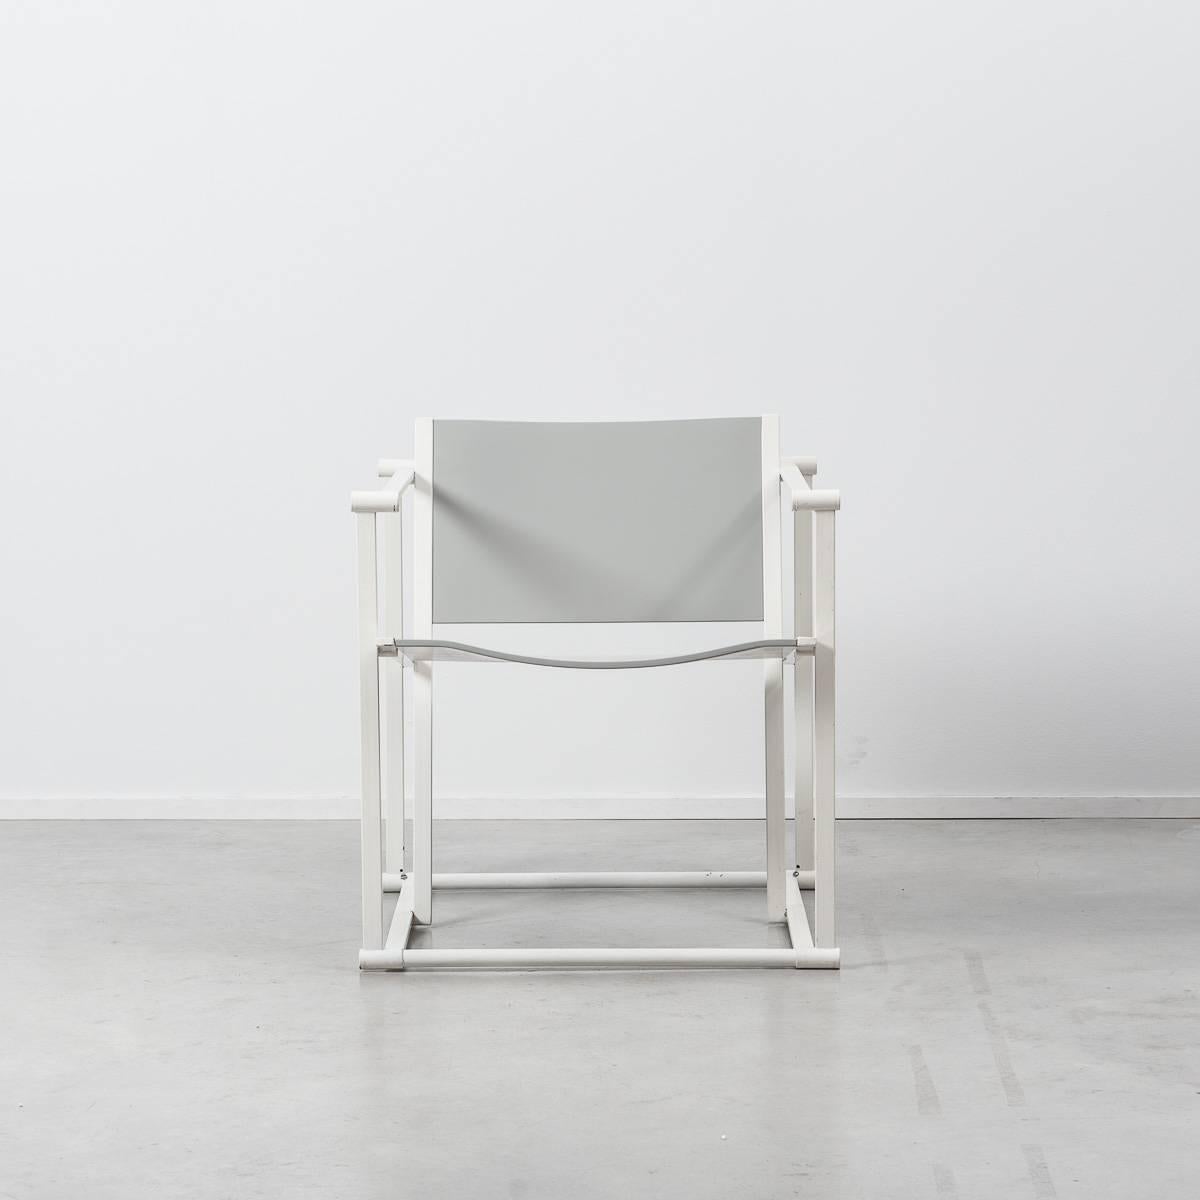 Late 20th Century Radboud Van Beekum FM60 Plywood Cube Chair for Pastoe